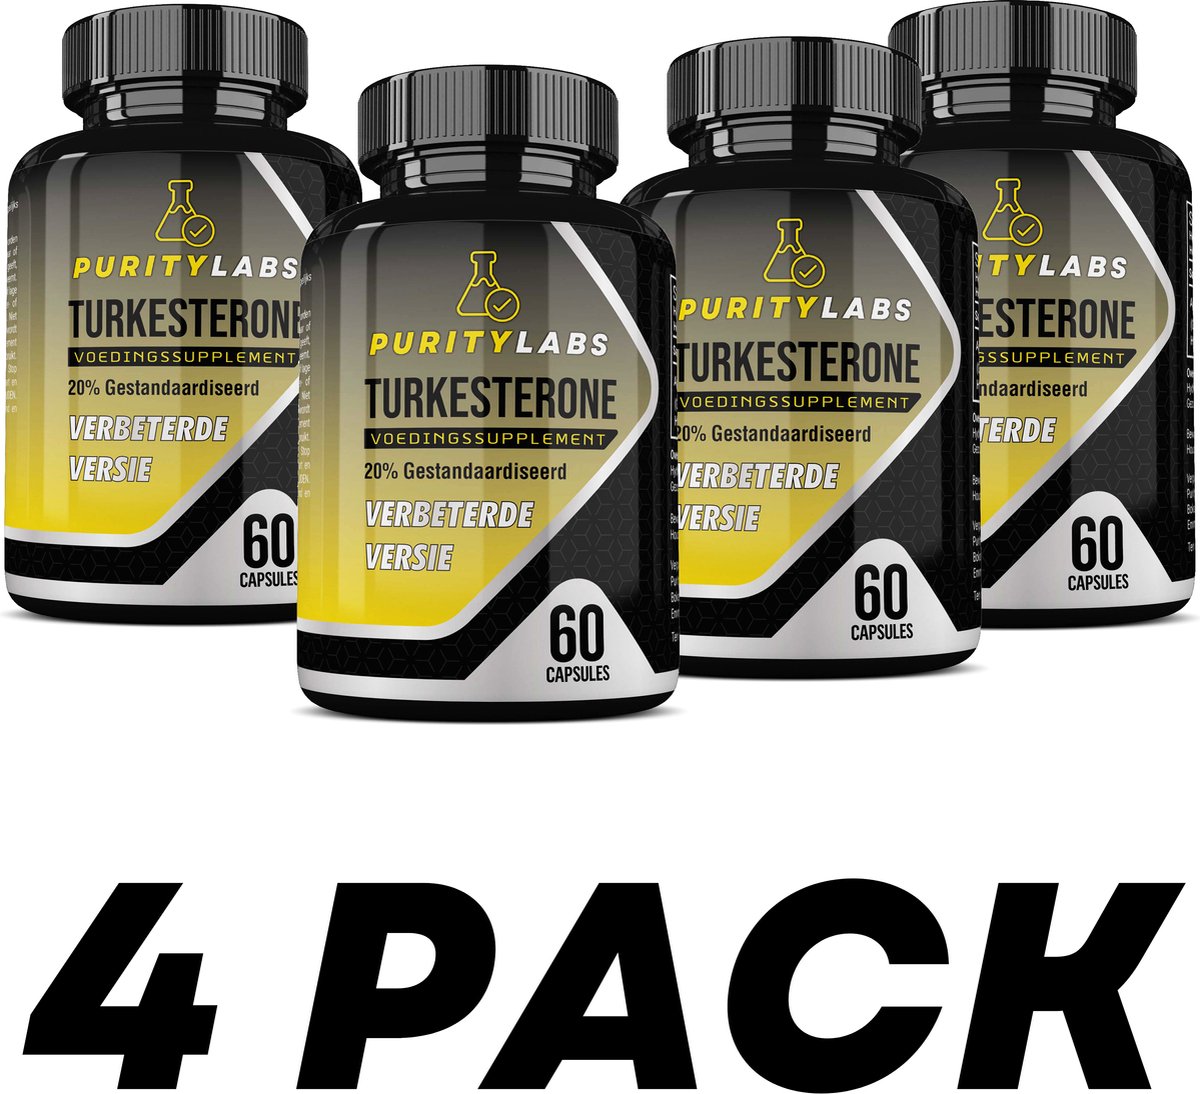 PurityLabs Turkesterone 4 Pack - 20% Gestandaardiseerd 500mg - Voordeelpakket - Hoogste Dosering Op De Markt - Versnelt Spiergroei - Muscle Builder - Droogtrainen - 240 Capsules